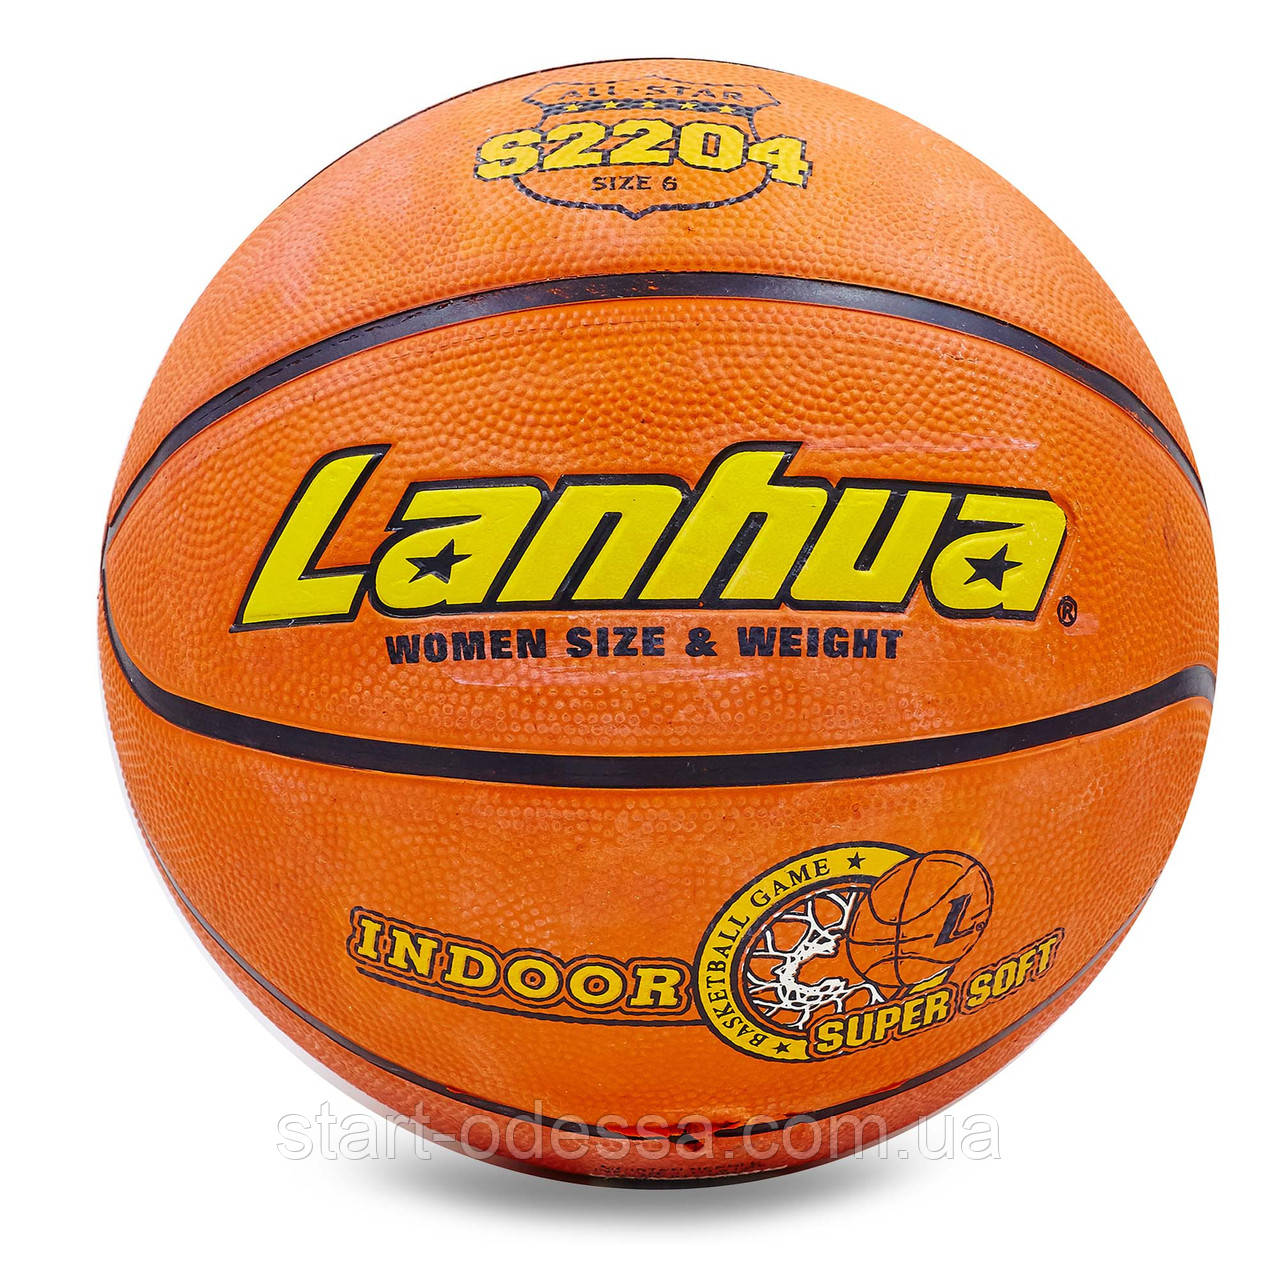 М'яч баскетбольний №6 LANHUA Super soft Indoor